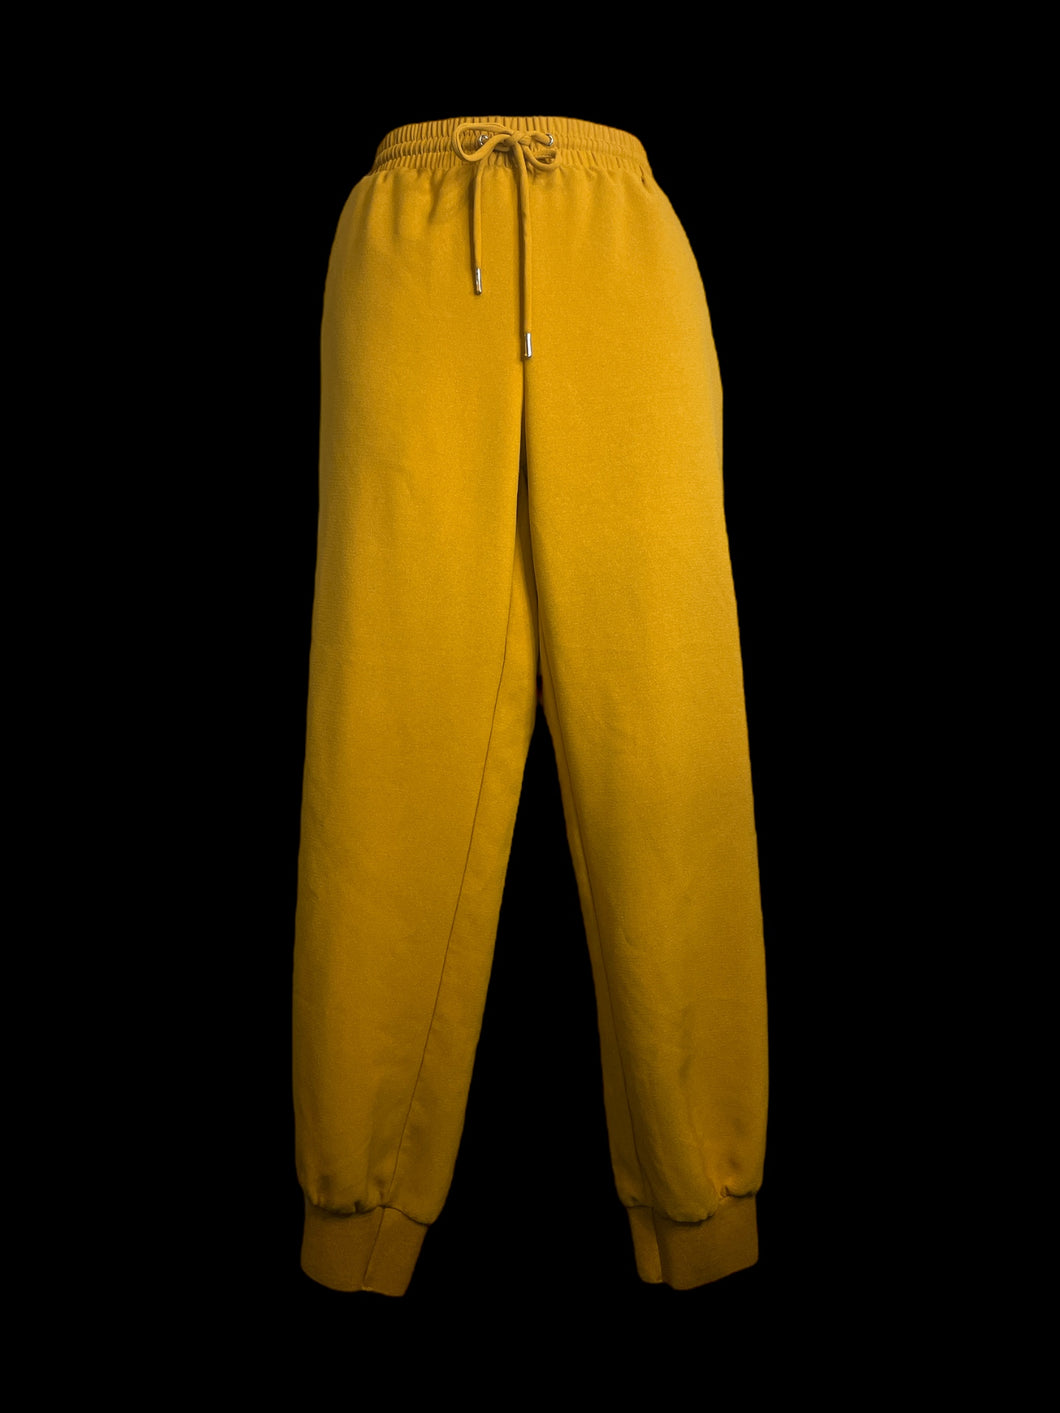 S Gold yellow jogger pants w/ pockets, & elastic drawstring waist